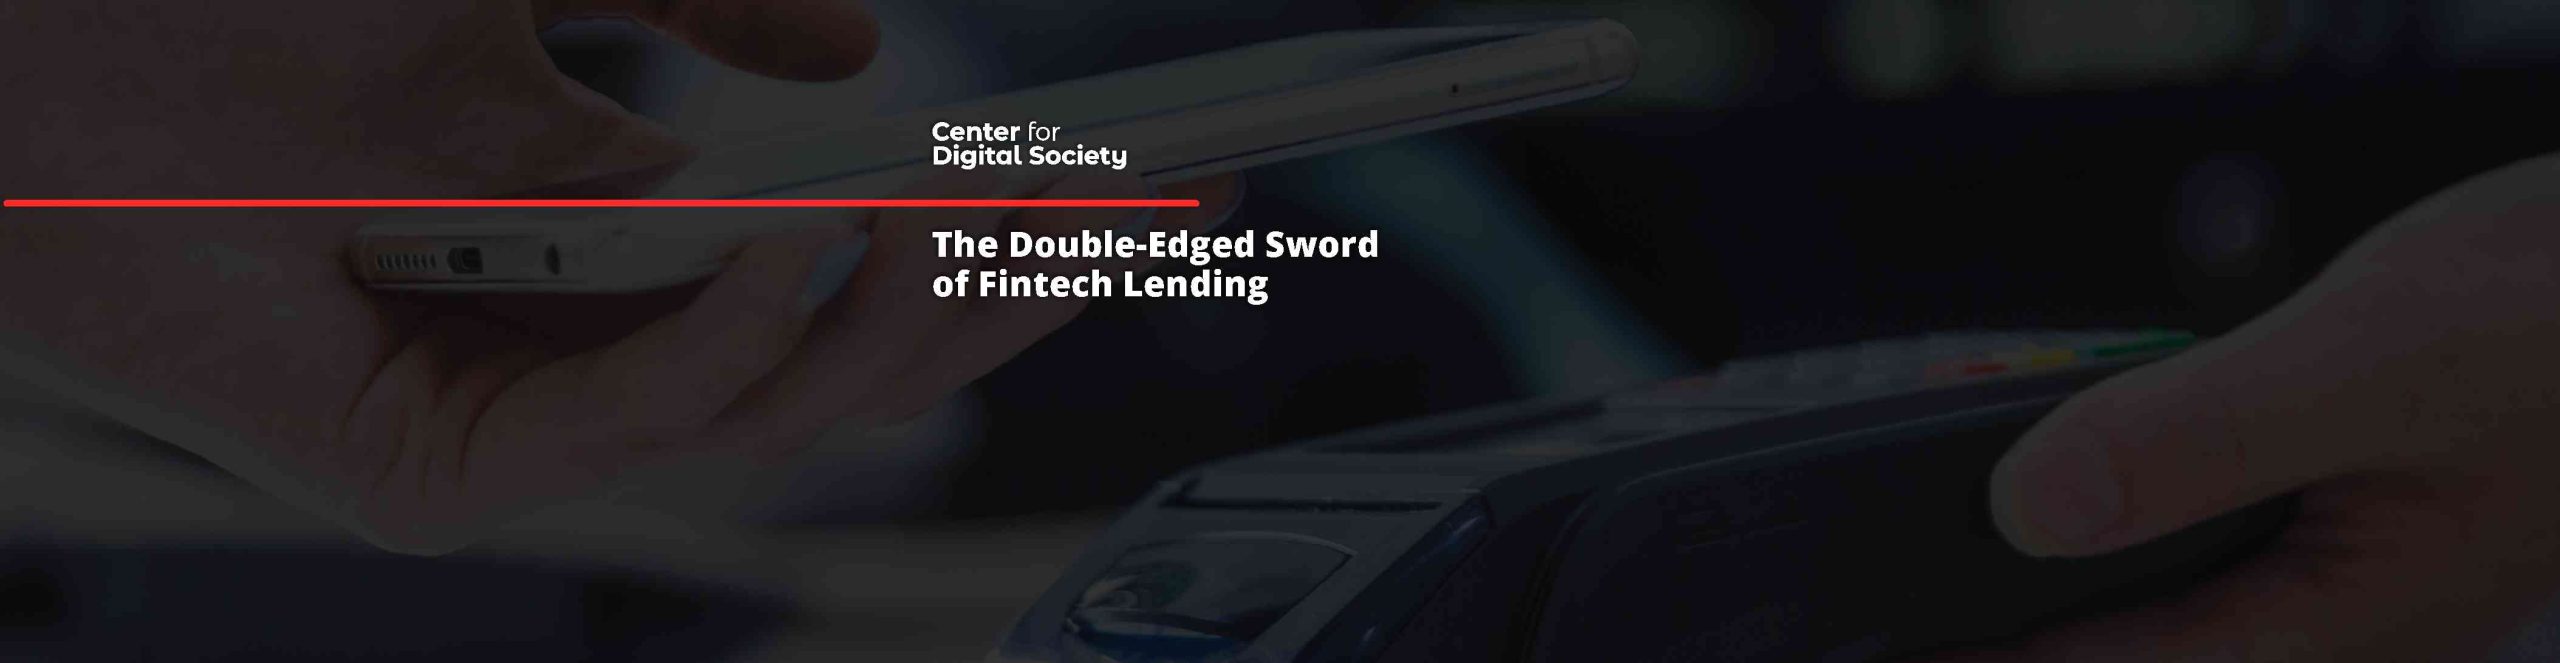 The Double-Edged Sword of Fintech Lending